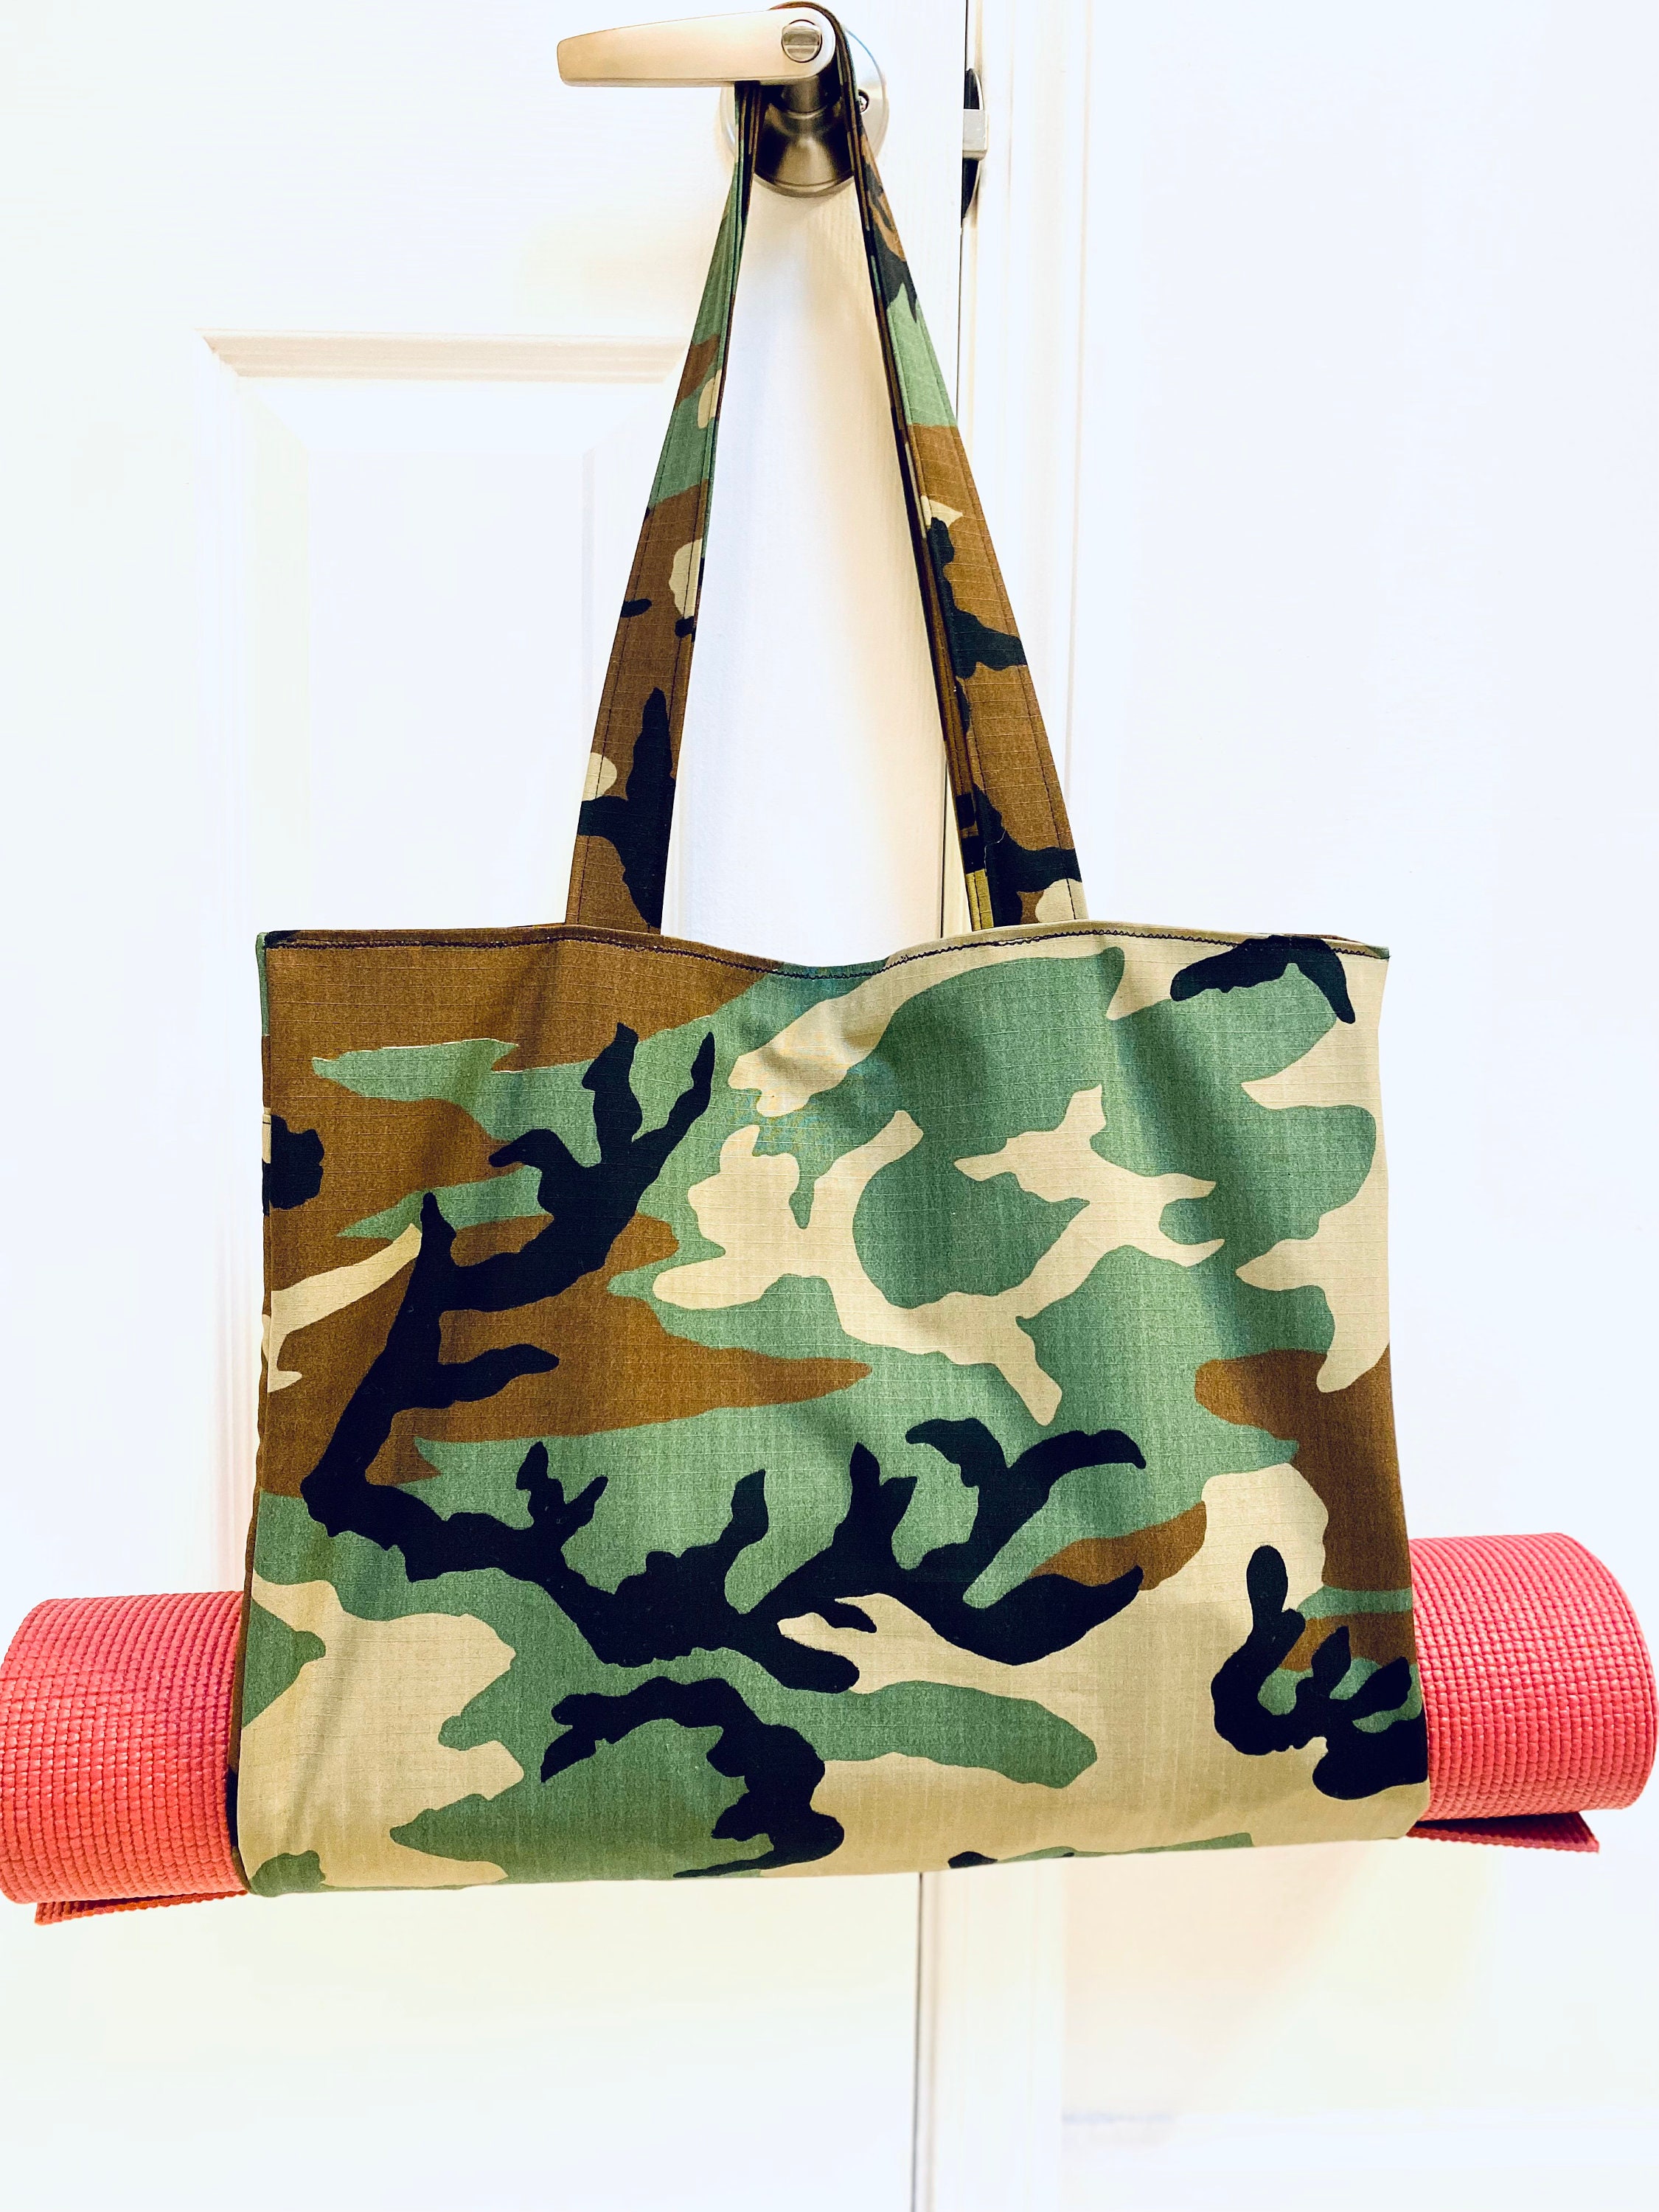 YOGA MAT Bag,foldable Stripped Design Printed Portable Canvas Gym